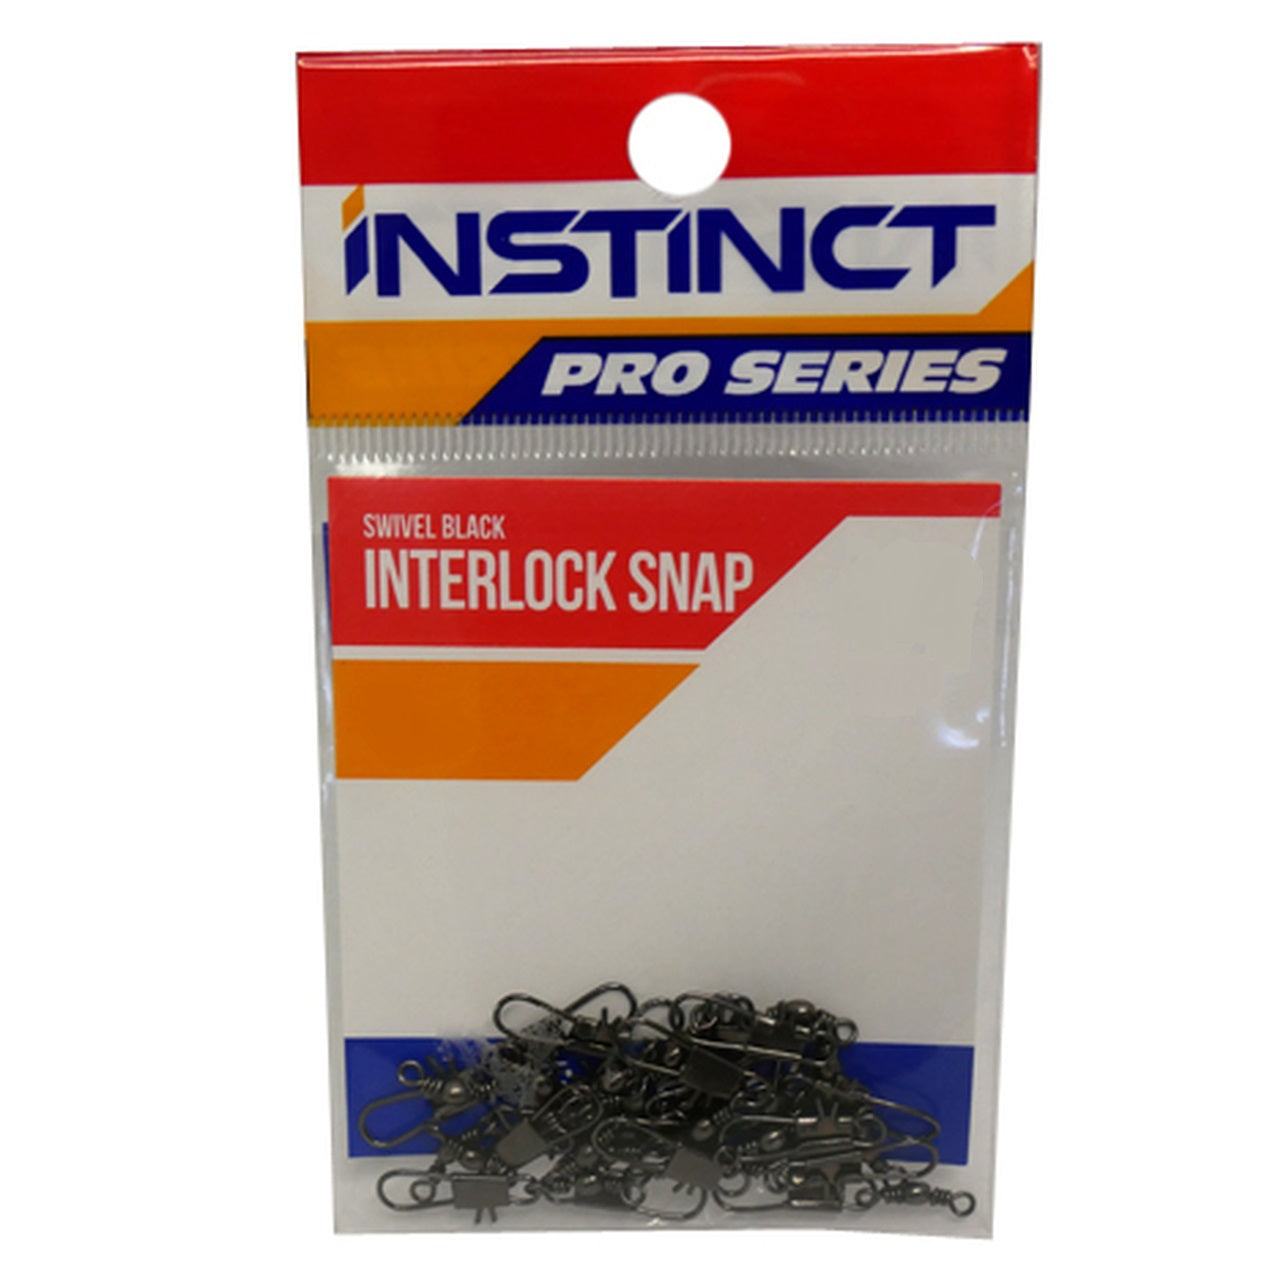 Instinct Pro Series IN207 Black Interlock Snap Swivel